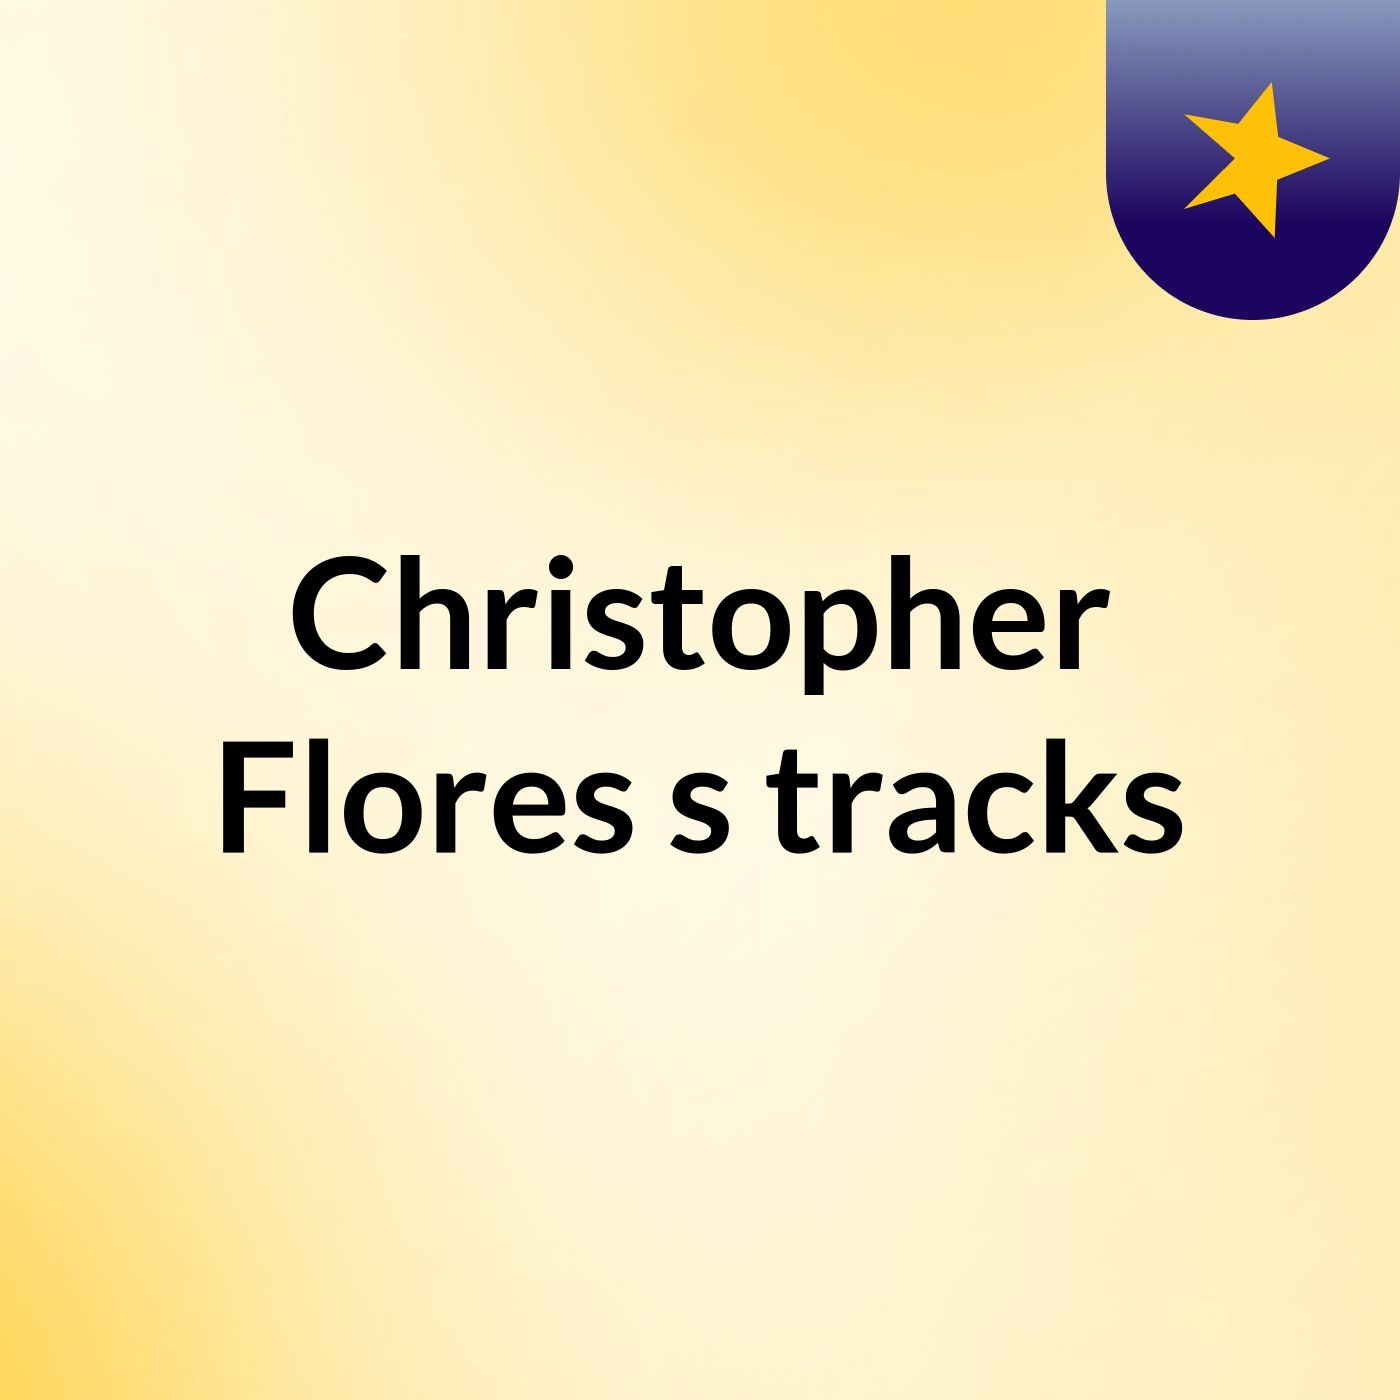 Christopher Flores's tracks